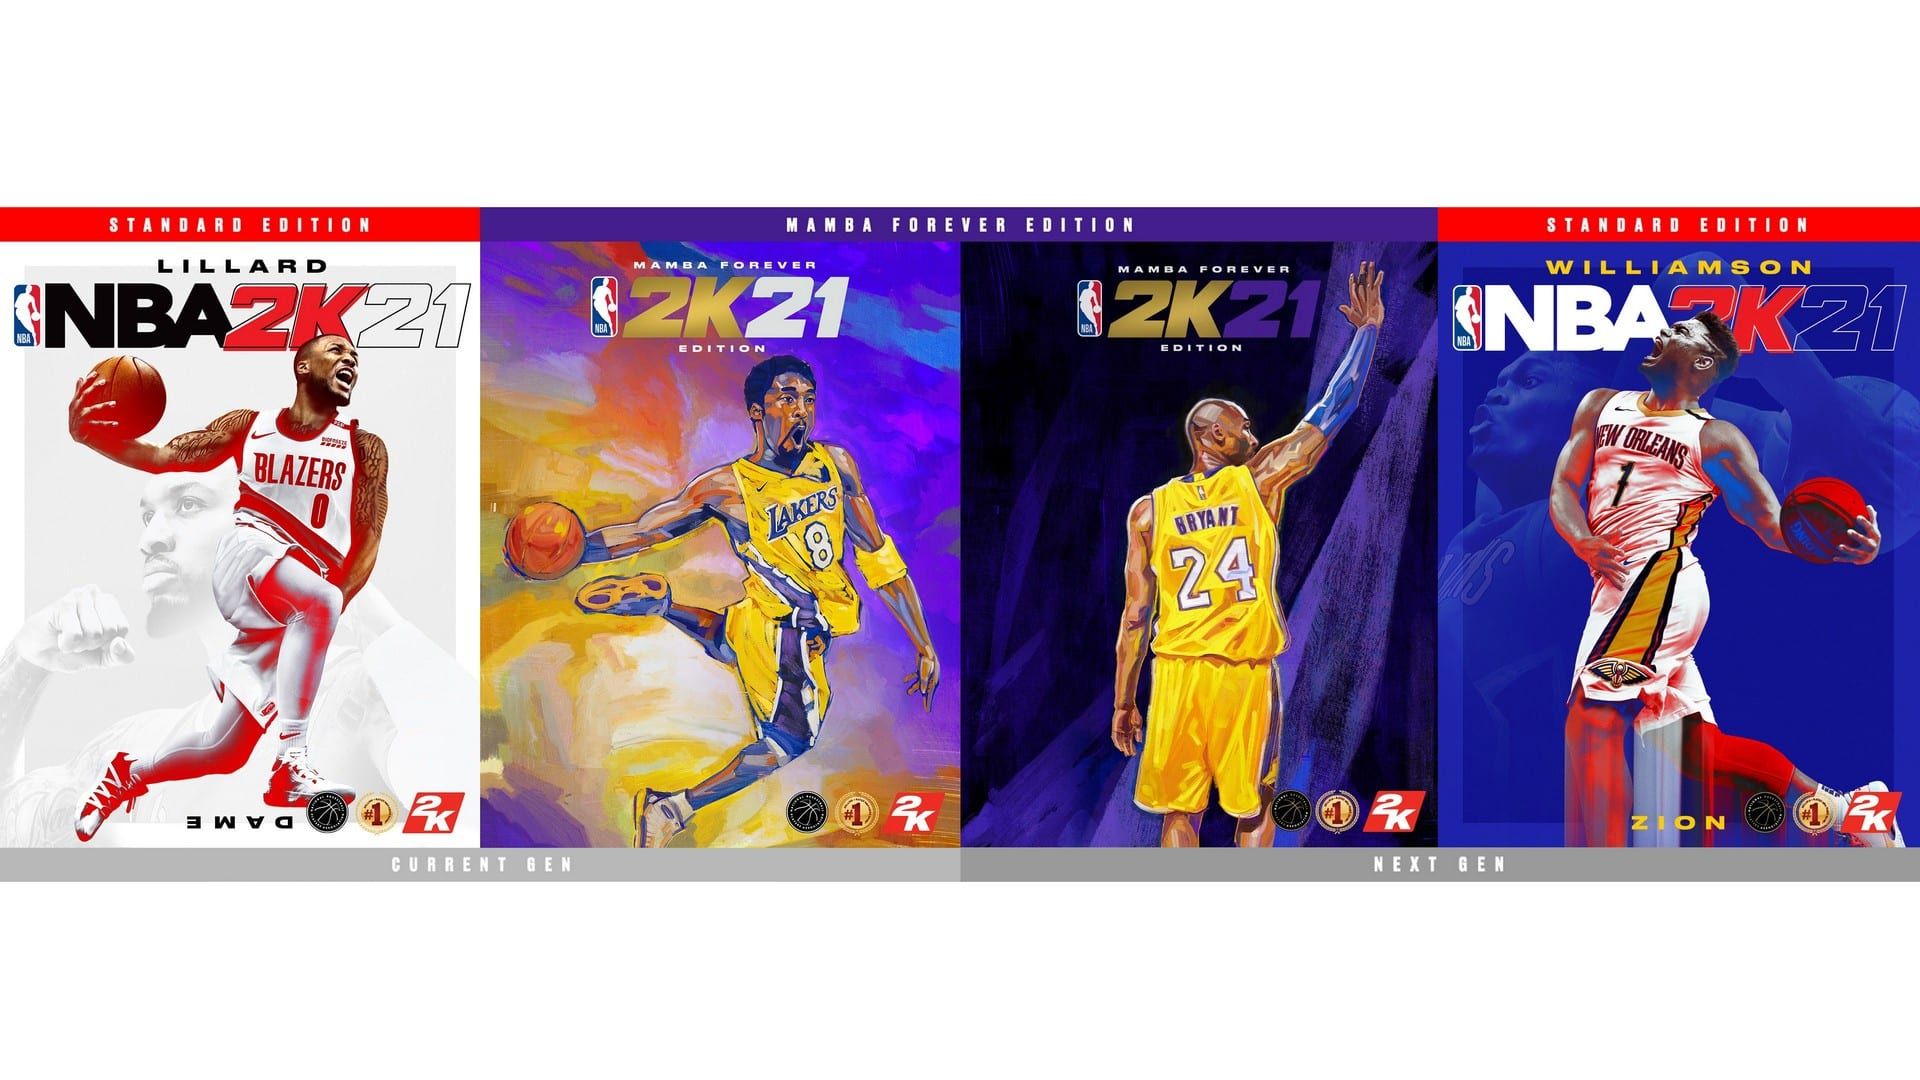 NBA 2K21 Bryant, Damian Lillard & Zion WIlliamson Are This Year's Cover Stars